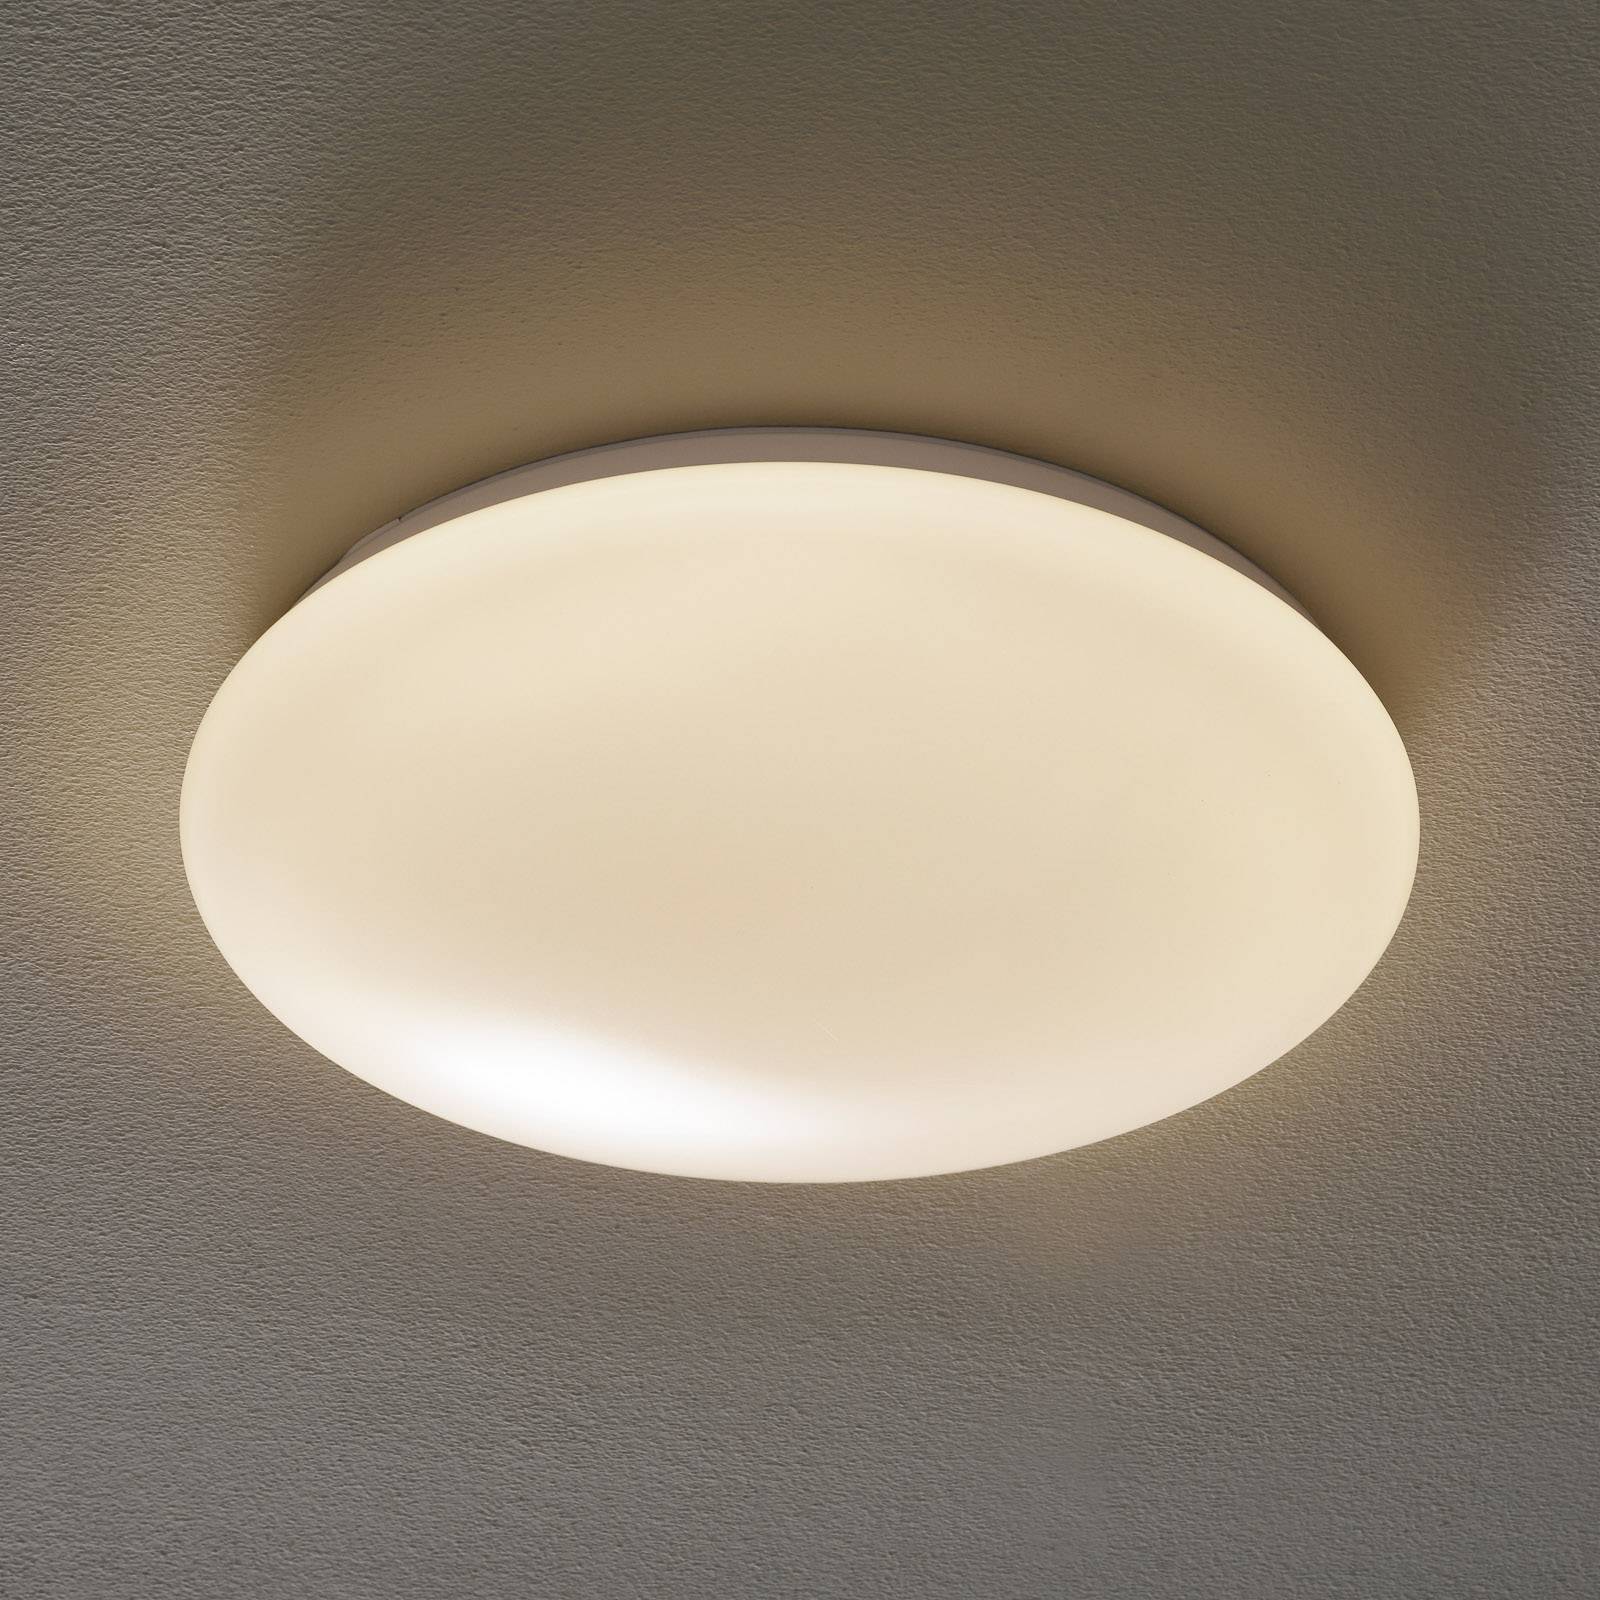 LED-Deckenlampe Altona LW3, warmweiß Ø 38,5 cm von Ledino